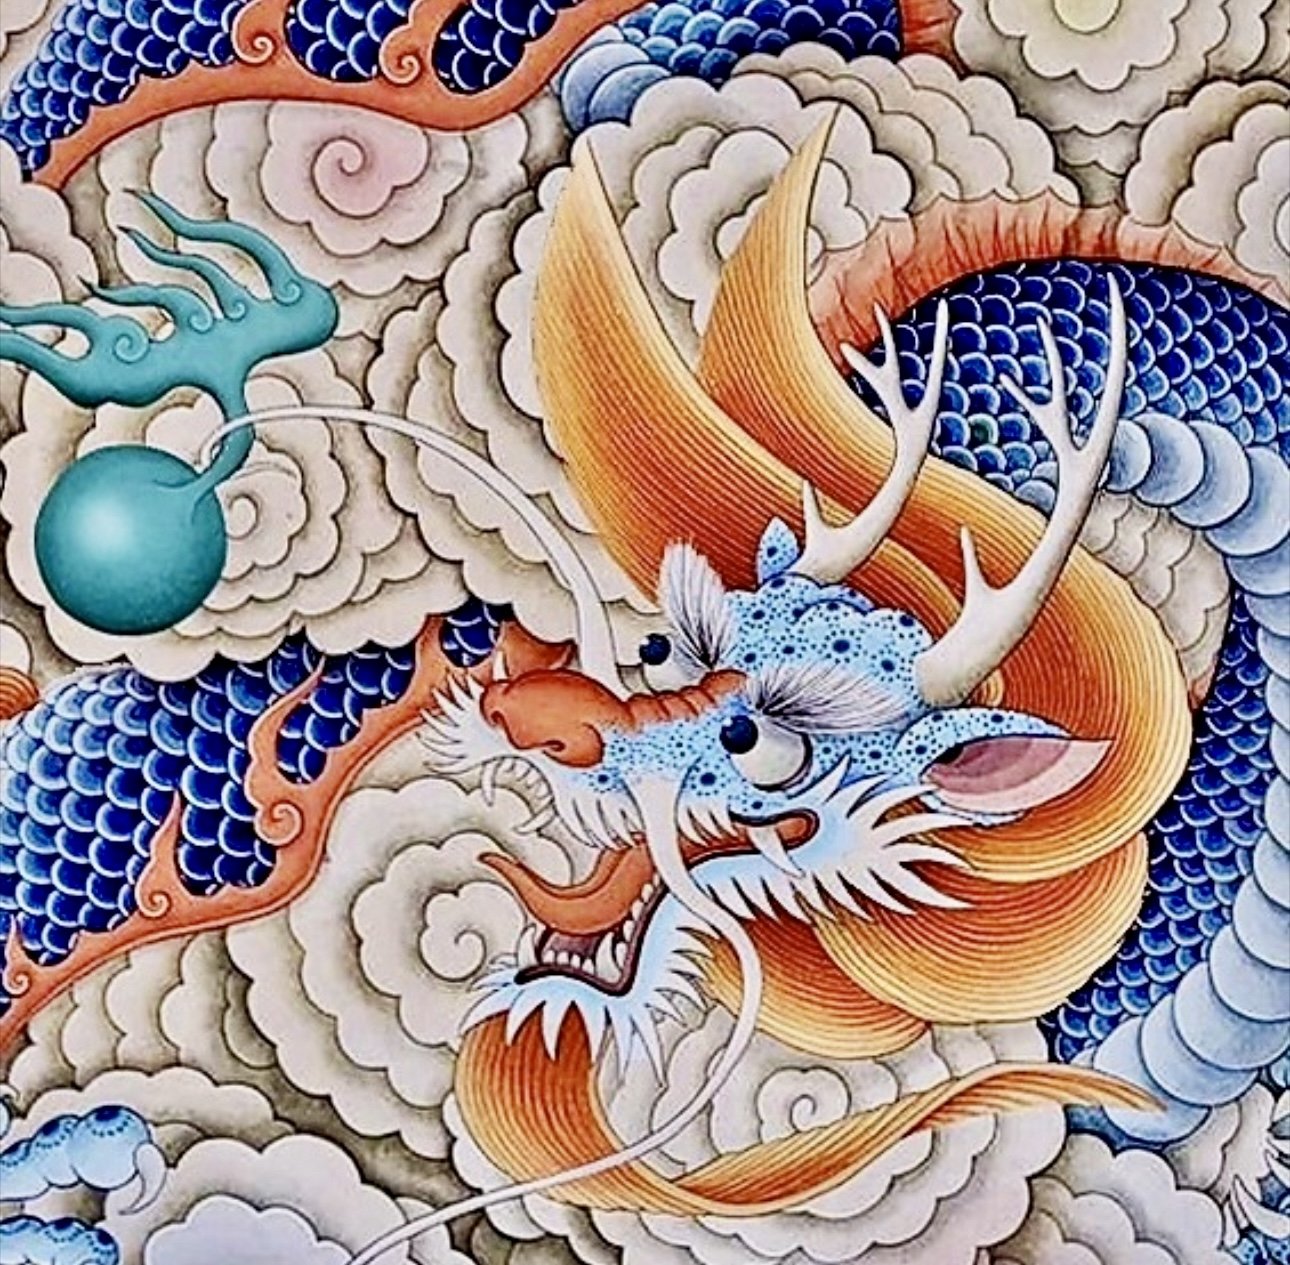 MinKim_Blue Dragon_30x30inches_watercolor on Hanji.jpg